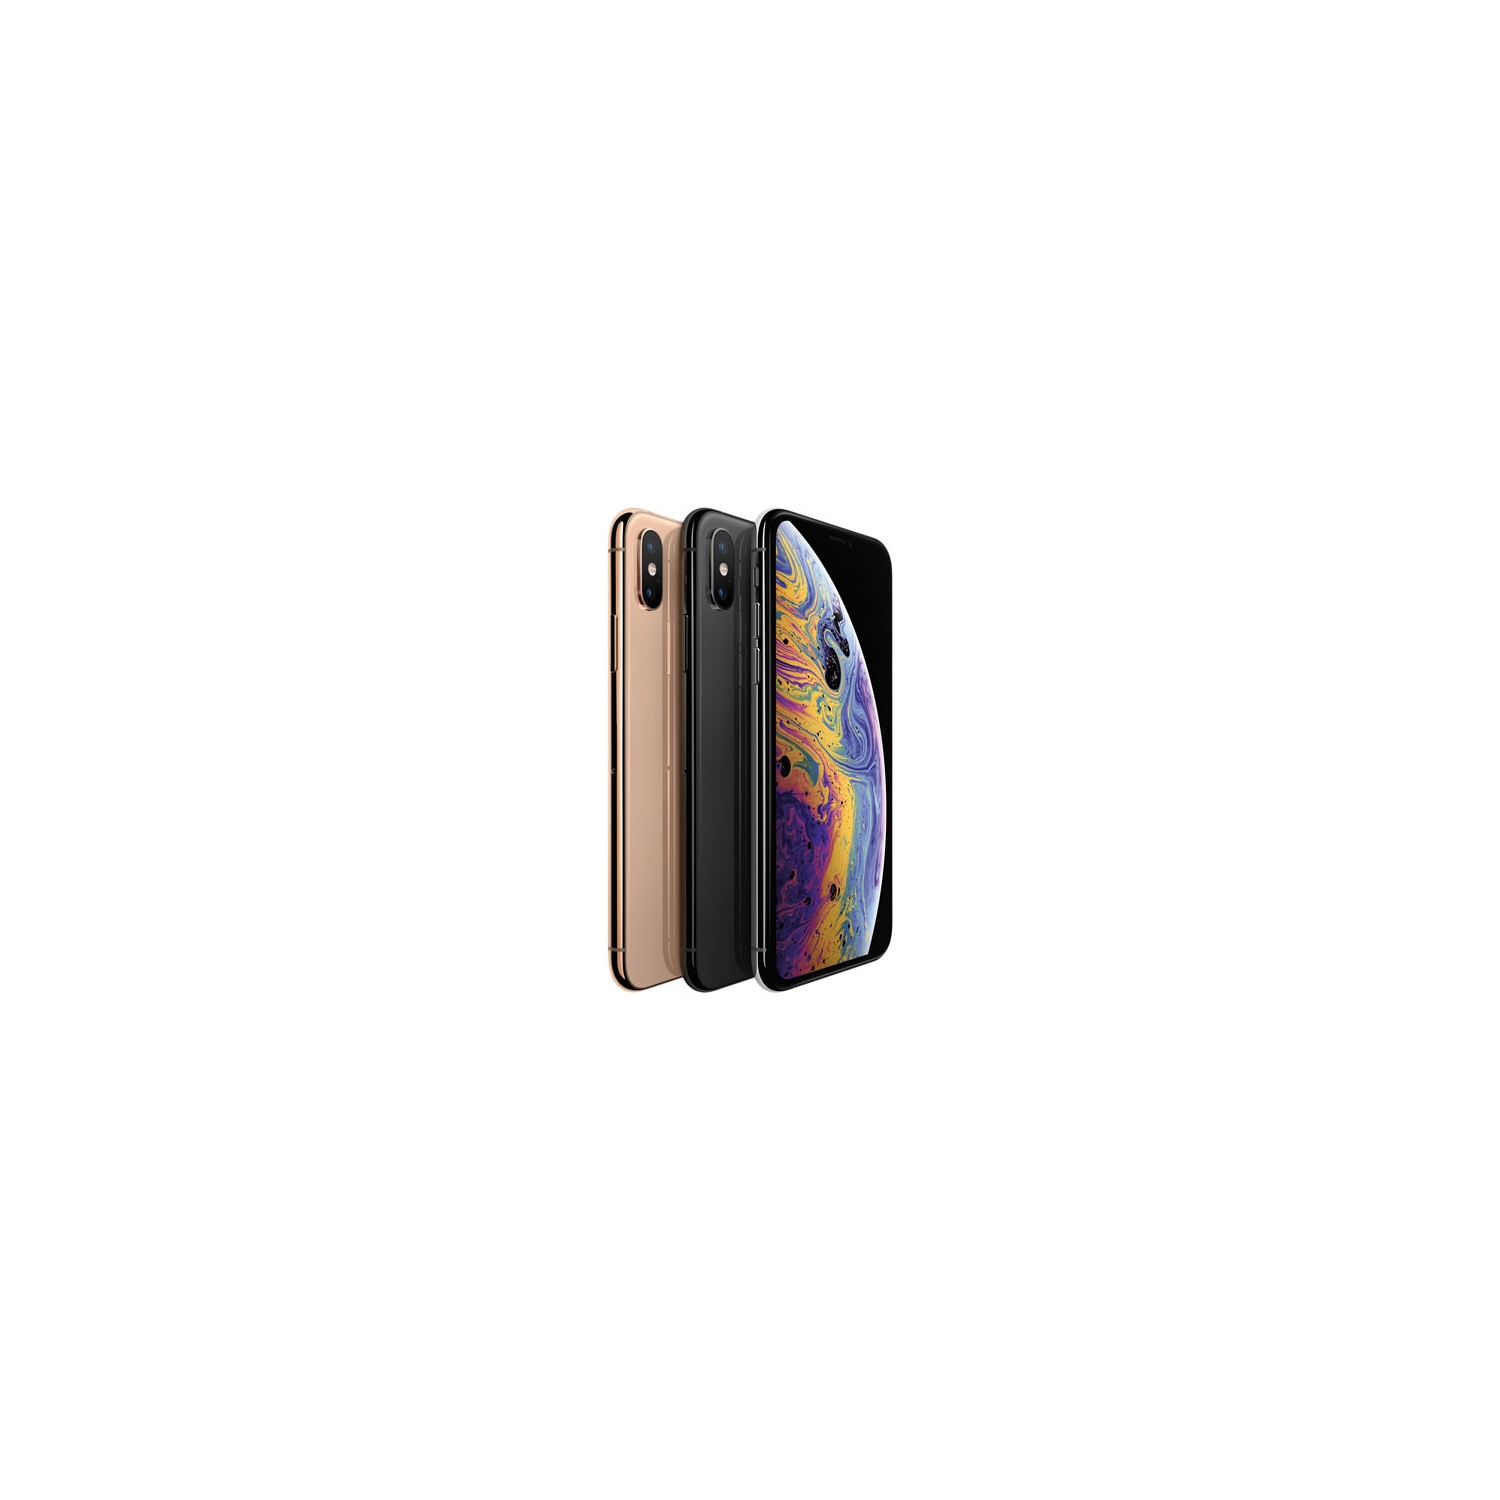 Apple iPhone XS 64GB Smartphone - Silver - Unlocked - Open Box